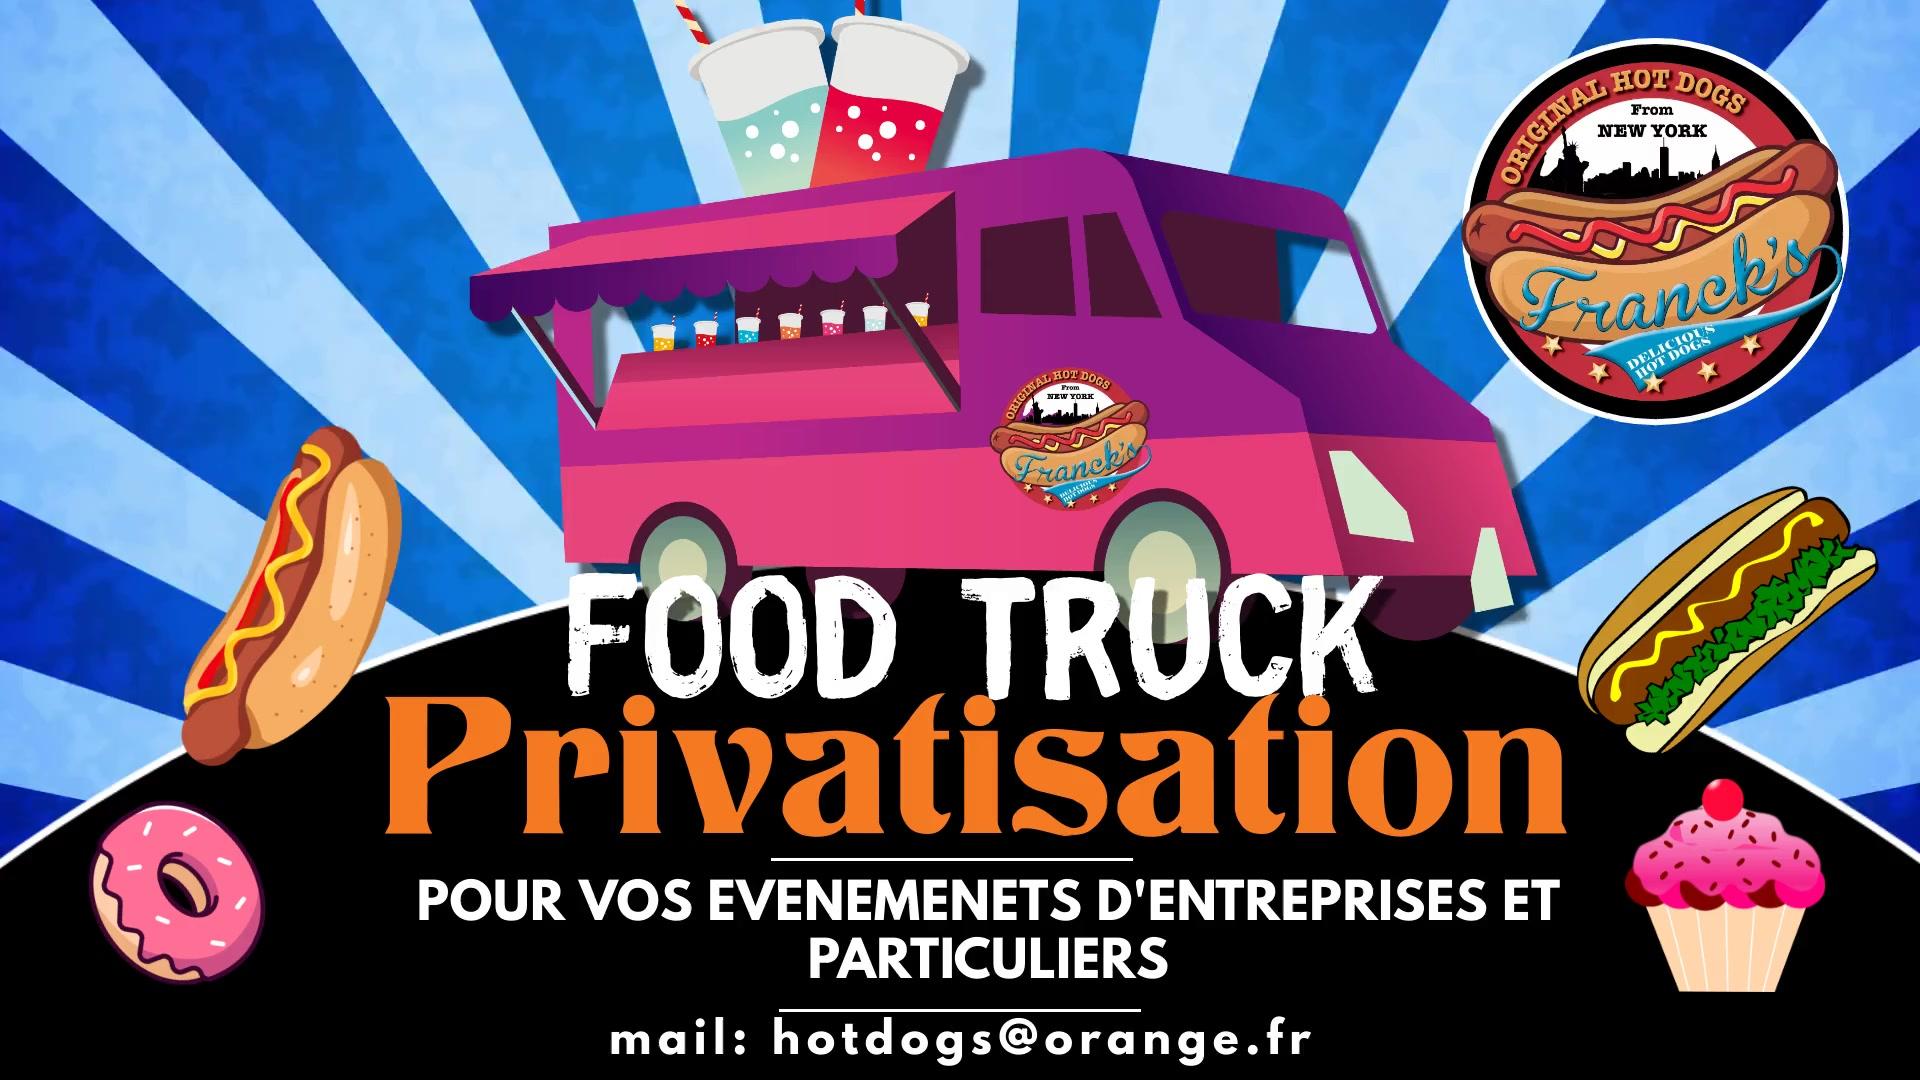 Food truck privatisation 1